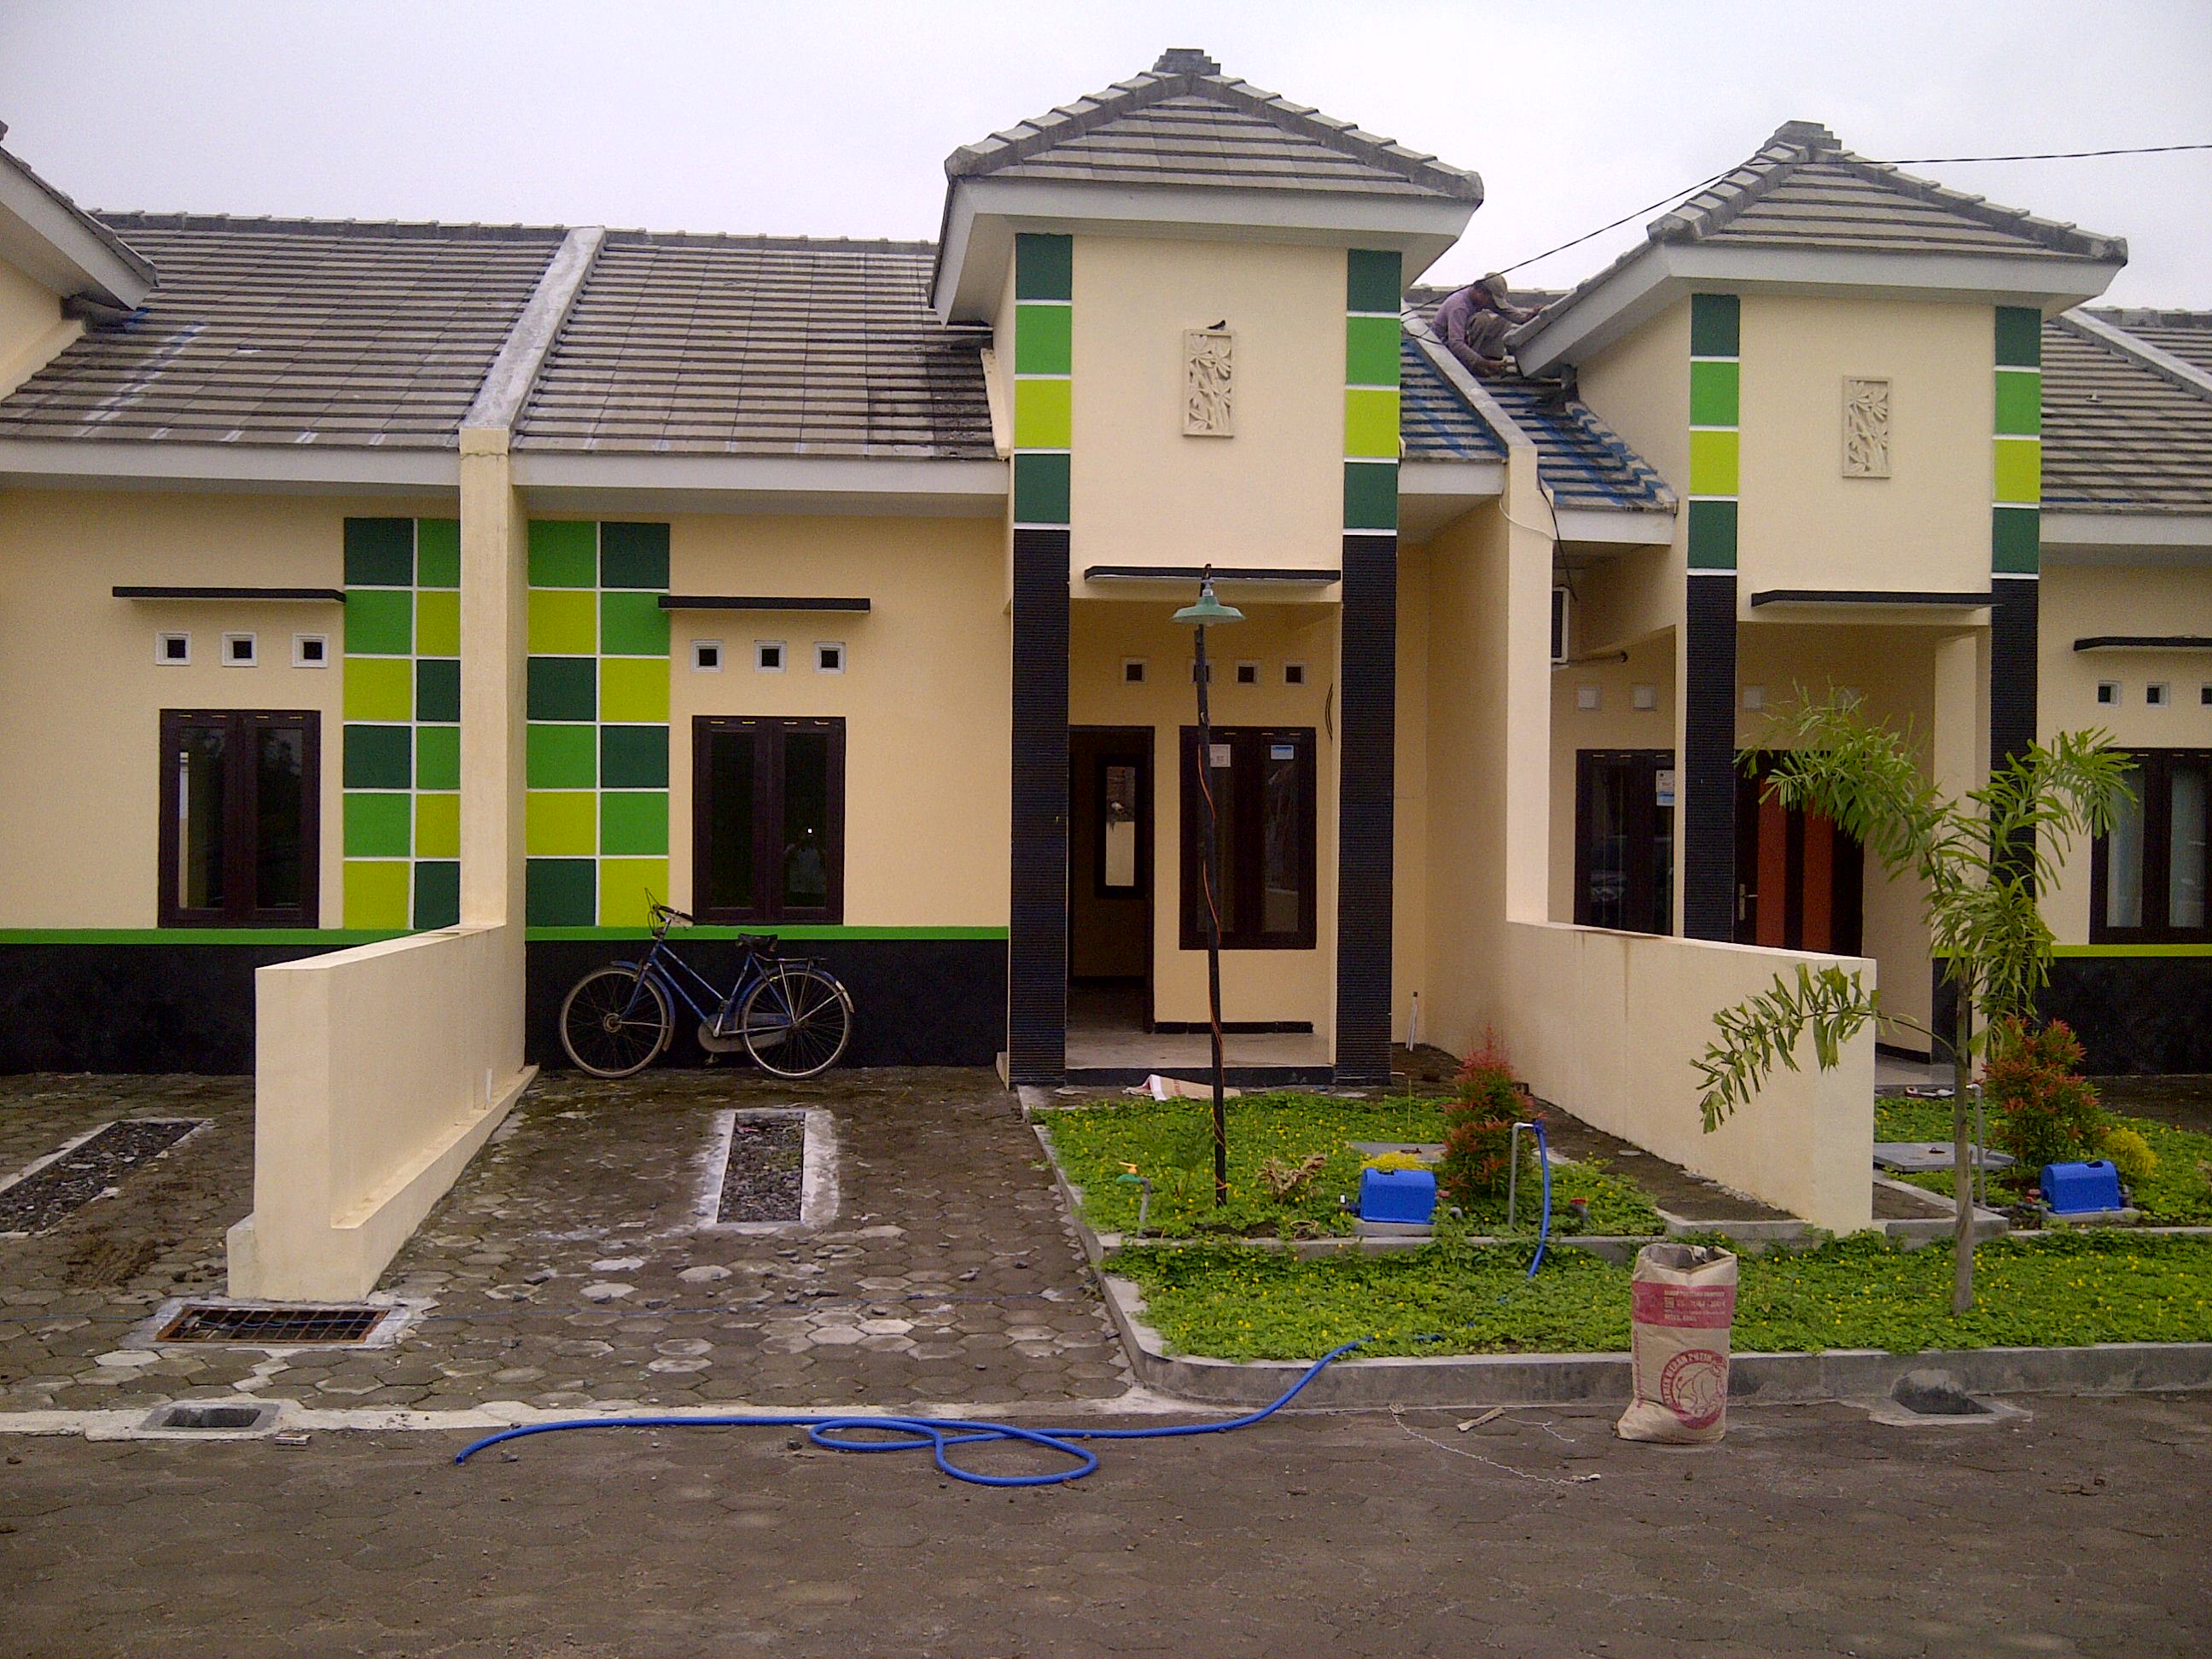 Dijual Rumah Murah di Semarang, Harga Rumah KPR 2014 di 